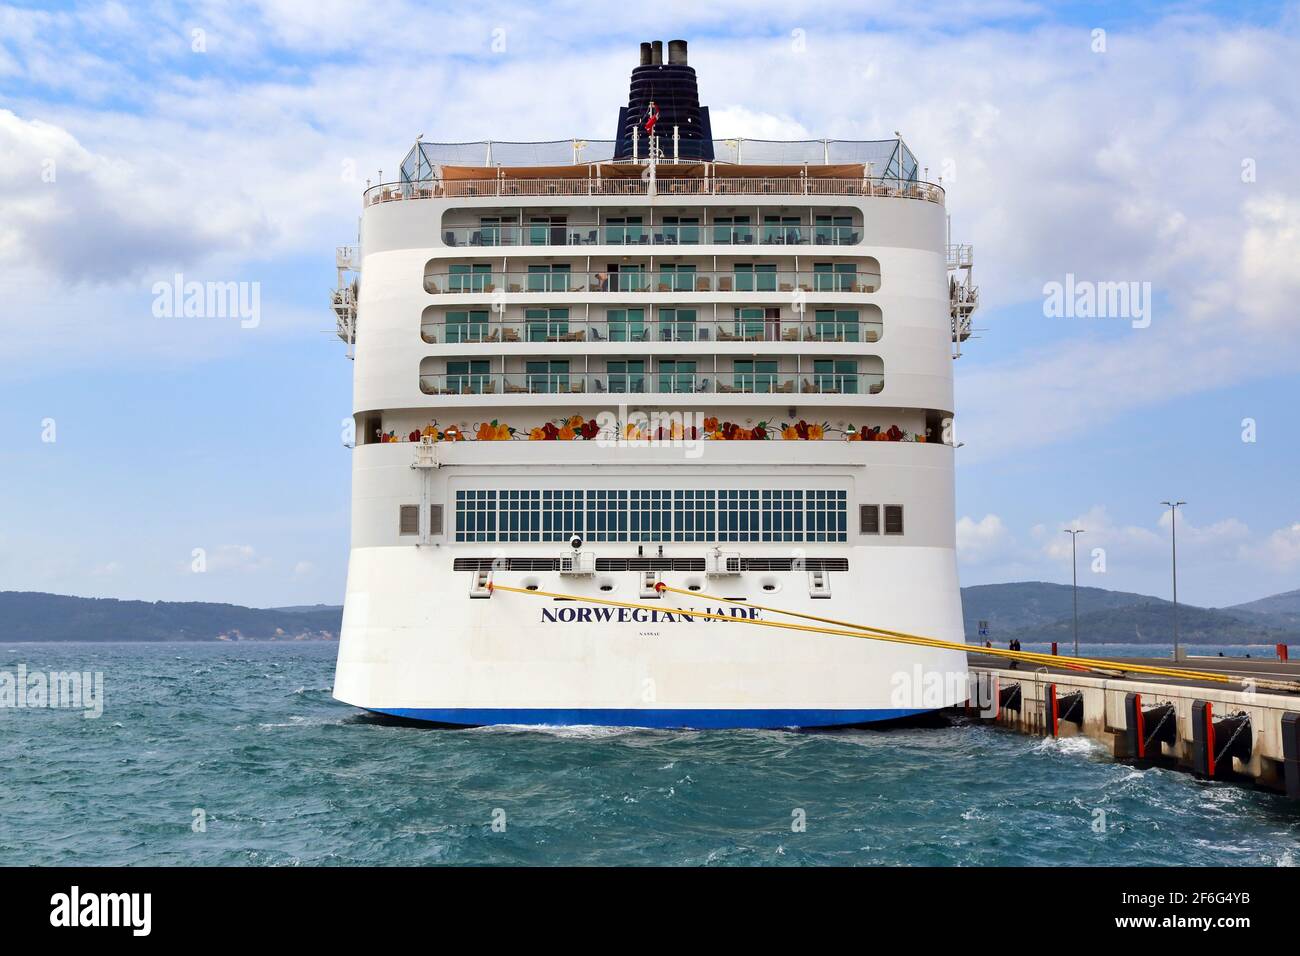 Stern of the Norwegian Jade cruise ship docked near Zadar, Croatia Stock Photo